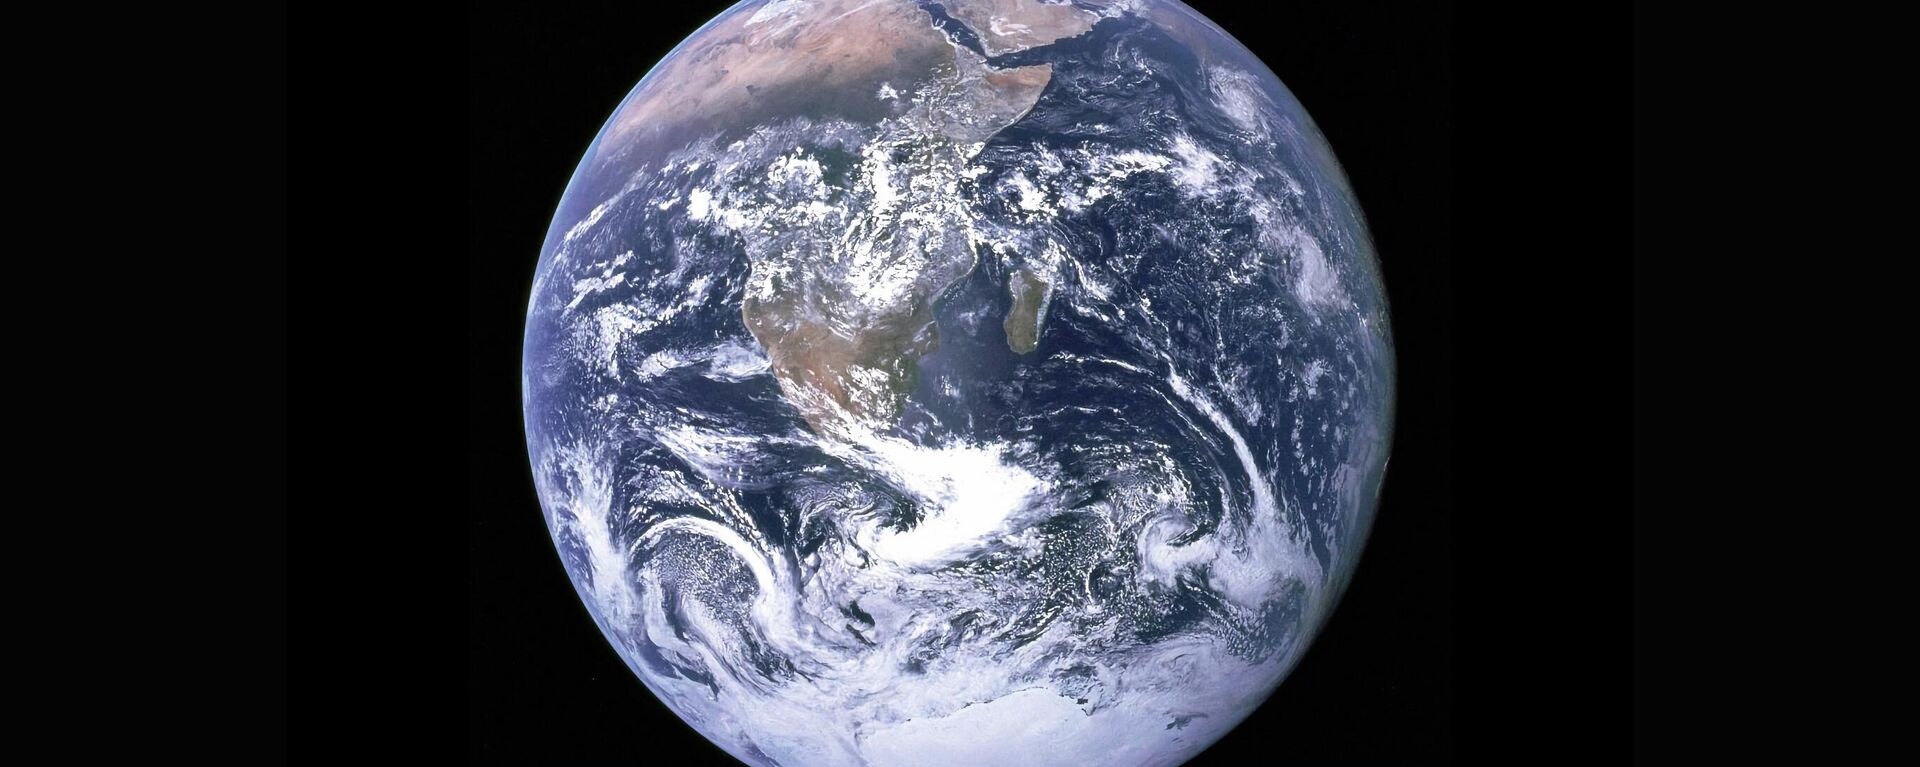 Planet Earth - Sputnik Mundo, 1920, 23.06.2021